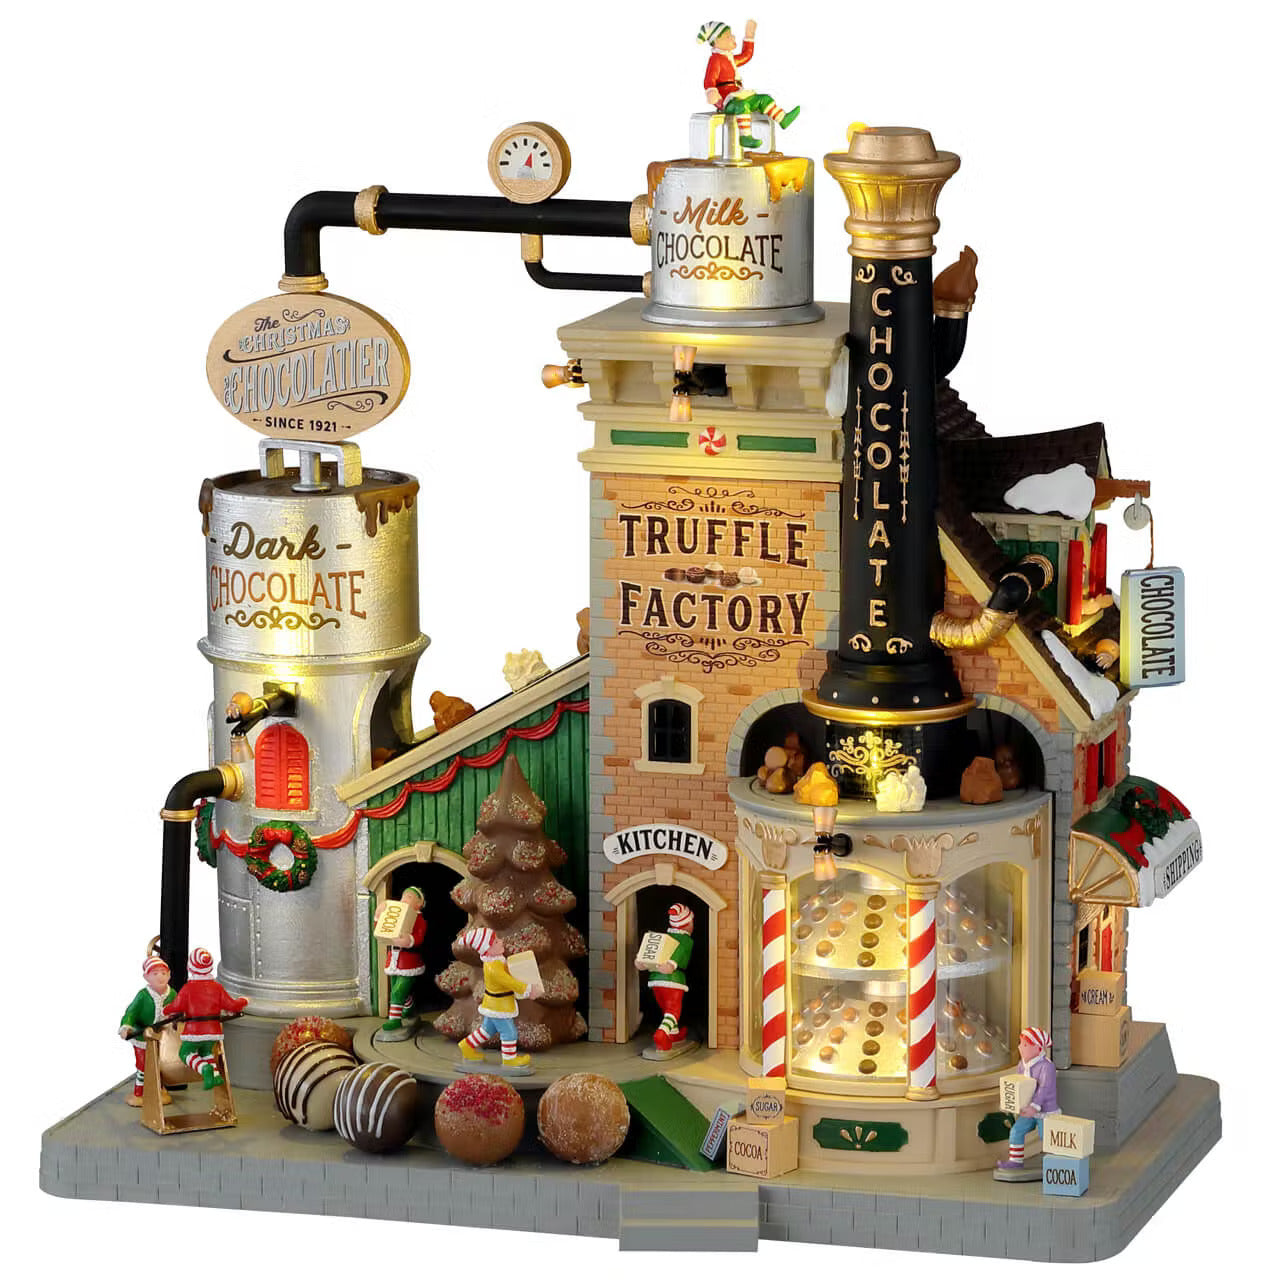 The Christmas Chocolatier Truffle Factory Lemax